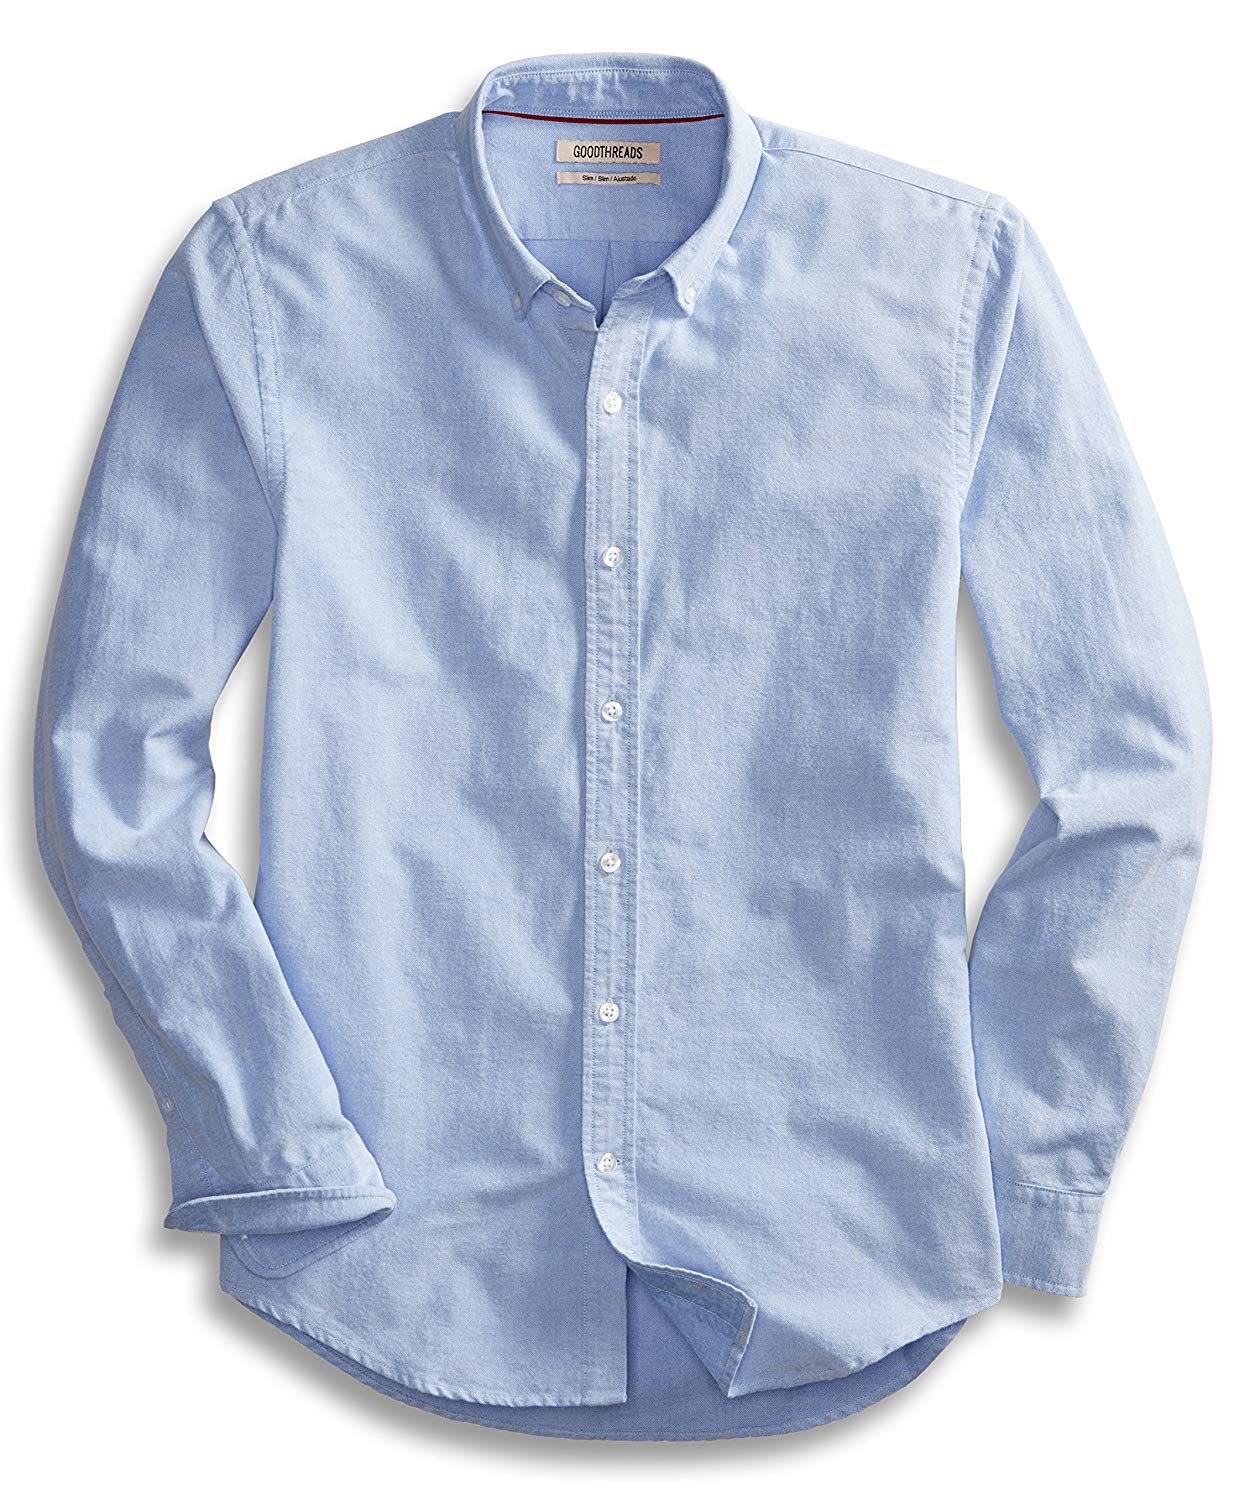 Goodthreads Men's Slim-fit Long-Sleeve Solid Oxford Shirt